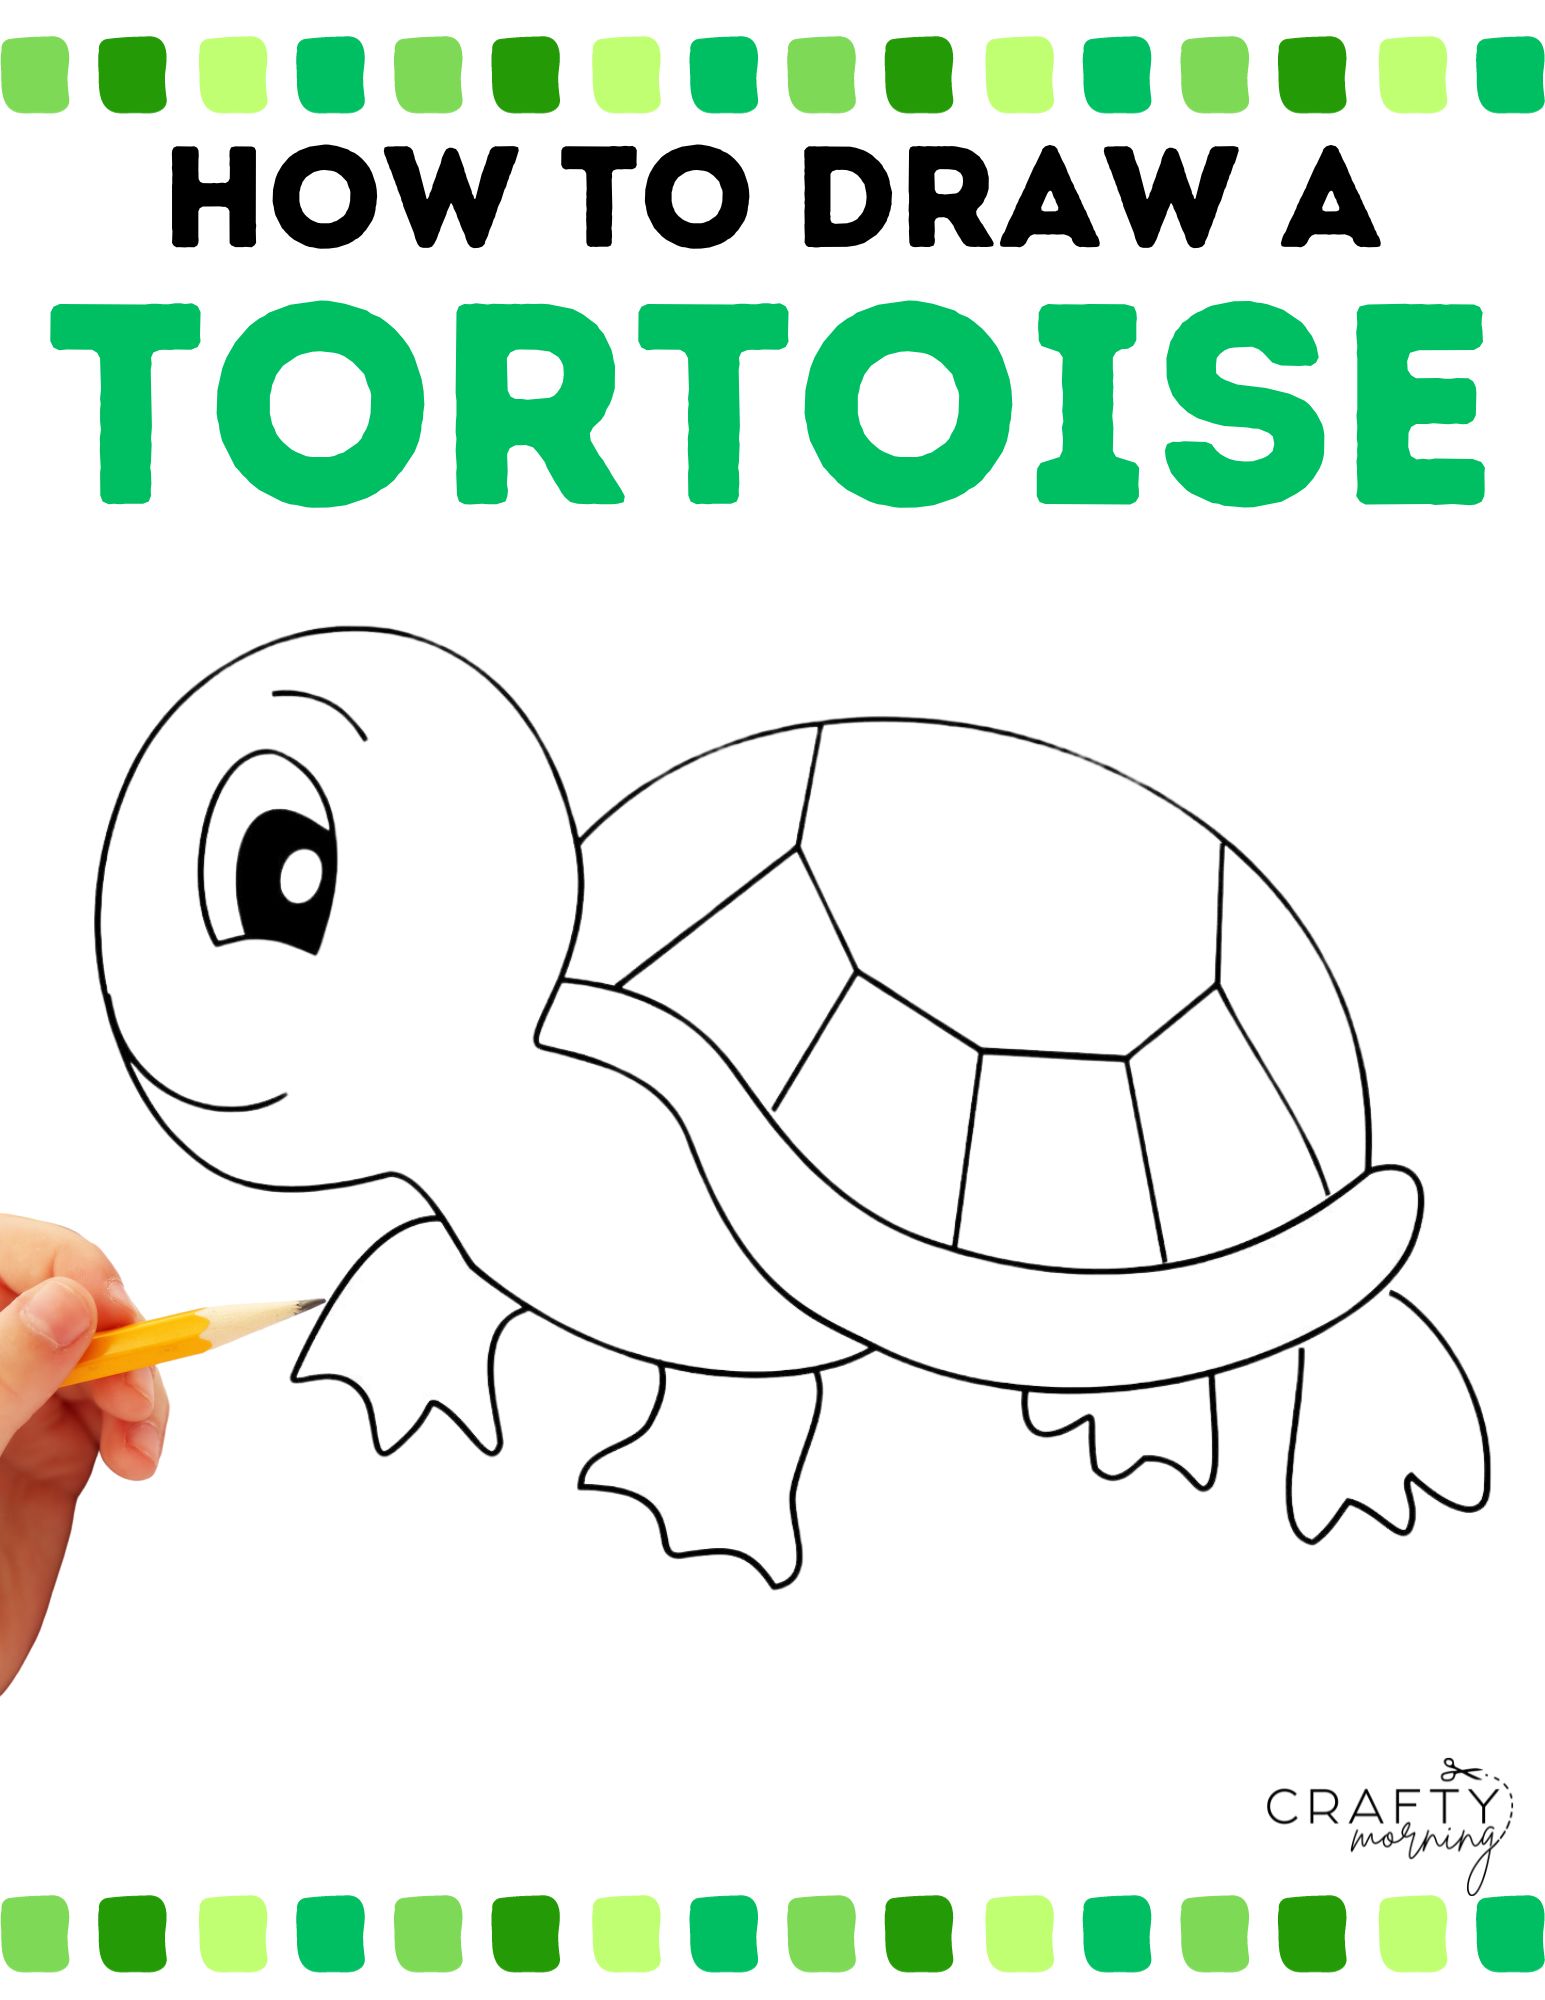 Baby russian tortoise, stylized for tortoise lover